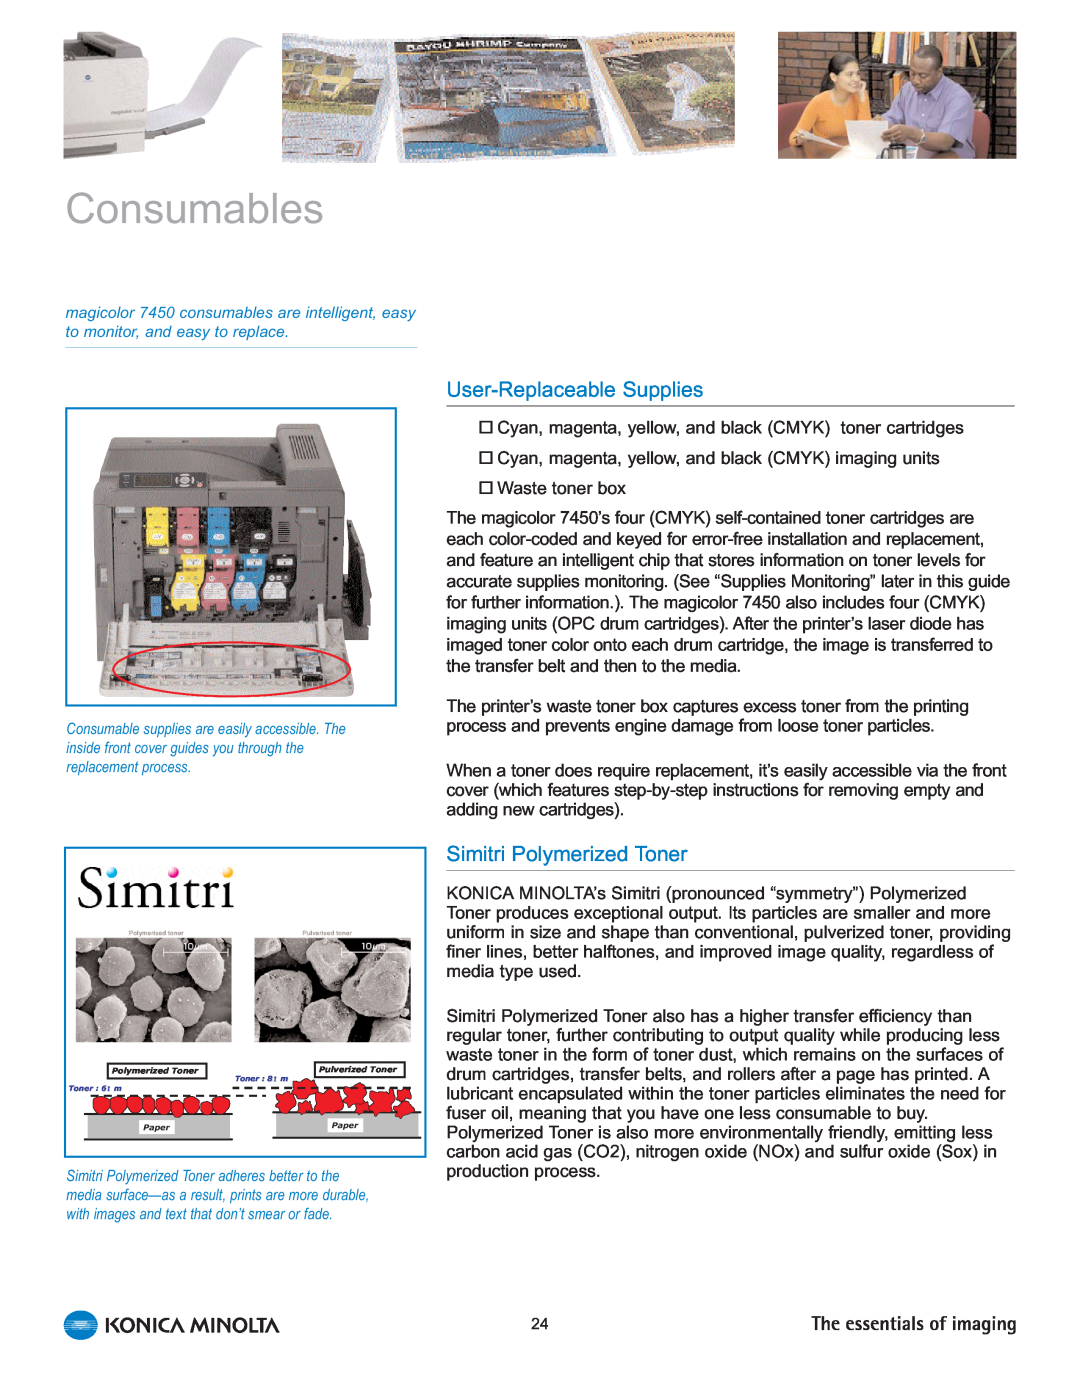 Konica Minolta 7450 manual Consumables, User-ReplaceableSupplies, Simitri Polymerized Toner 